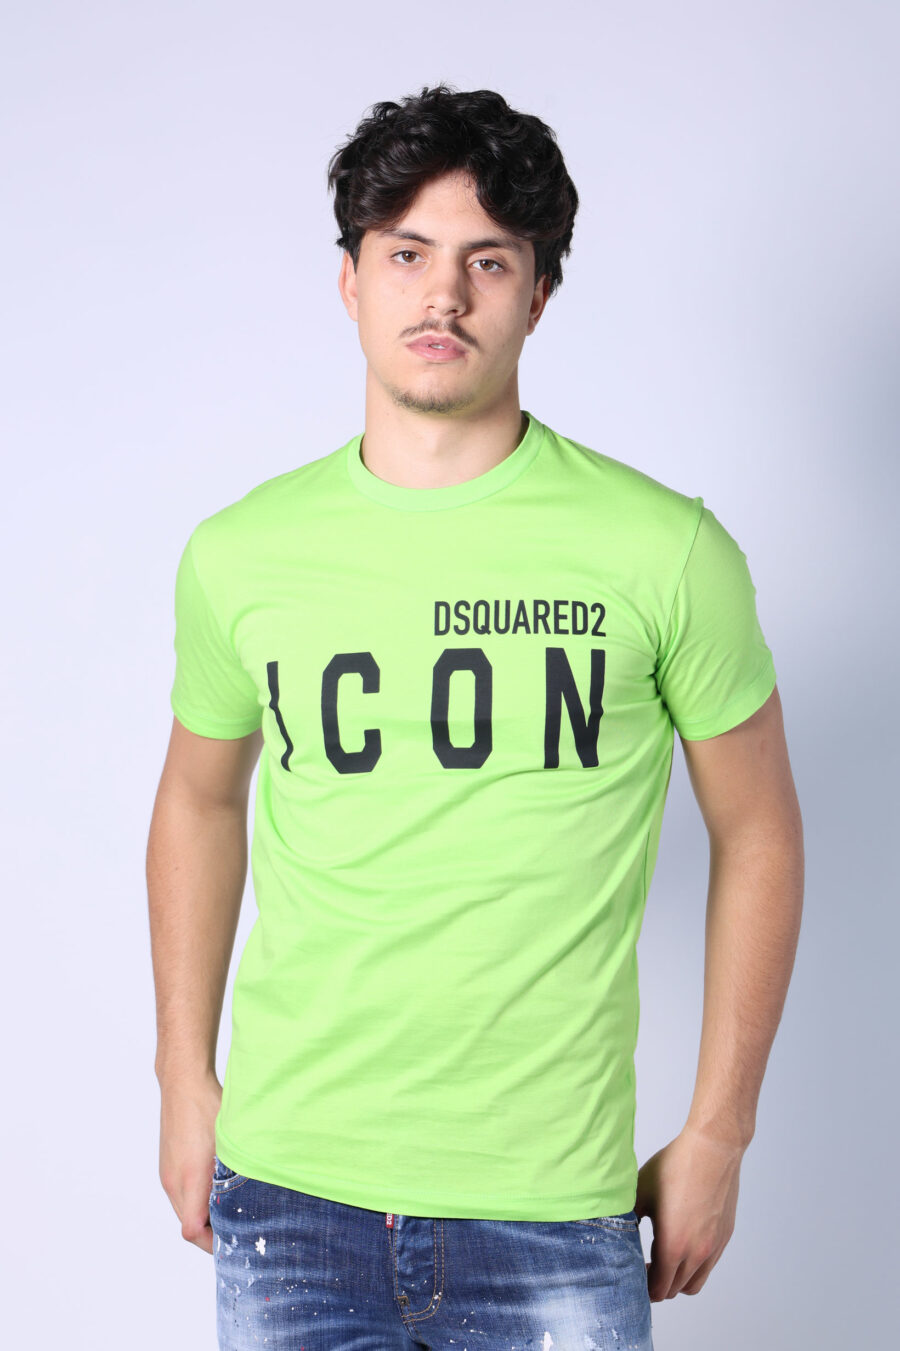 T-shirt verde lima com maxilogo "icon" preto - Untitled Catalog 05395